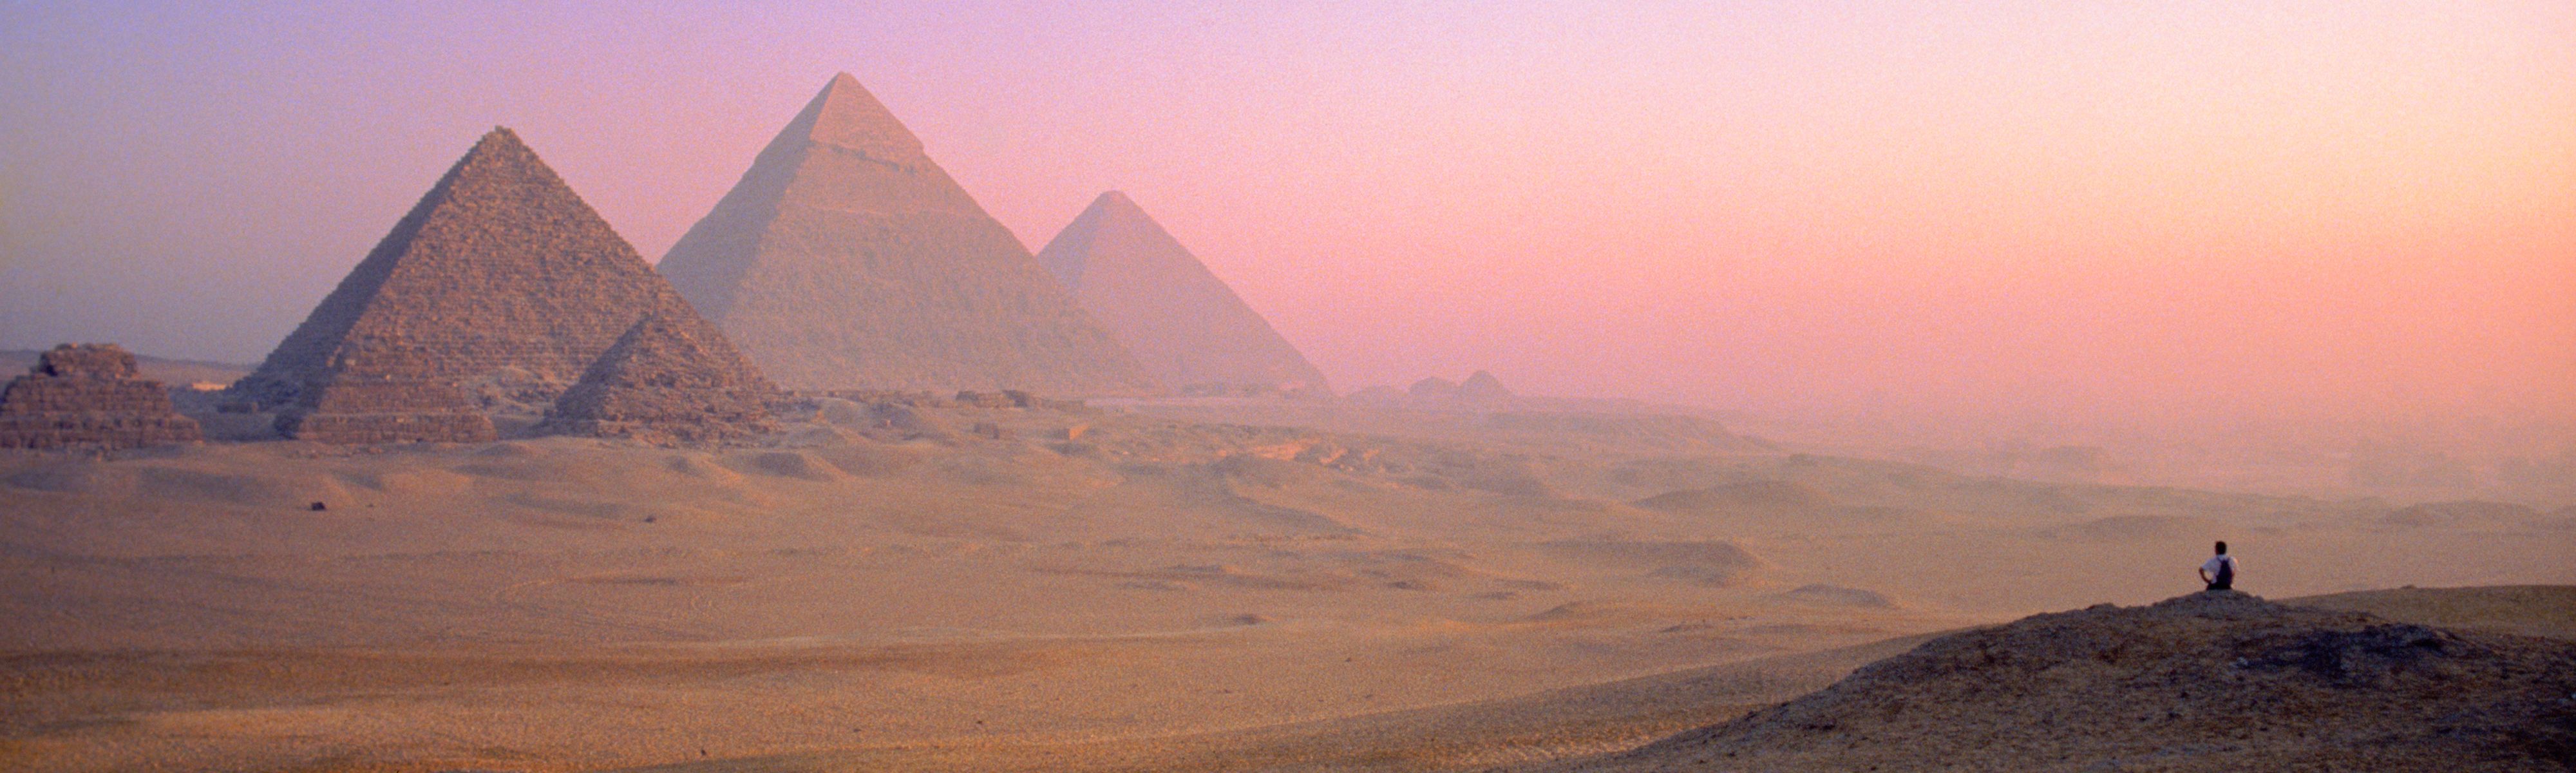 Man sitting on hill looking at Great Pyramids of Giza at sunset